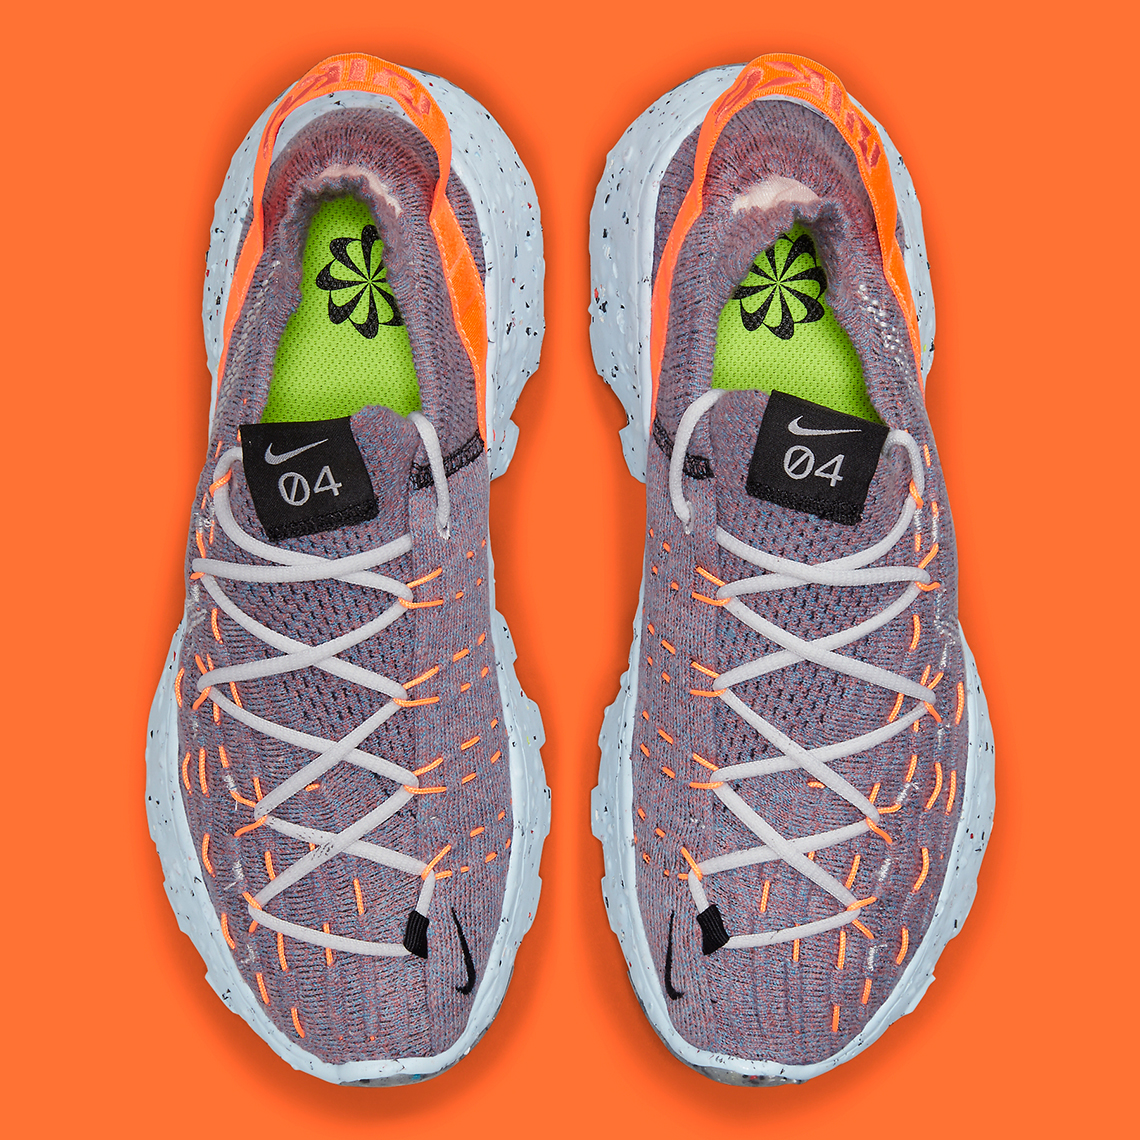 Nike Nike Free Run 5.0 Running Shoe Multi Color Cd3476 900 4